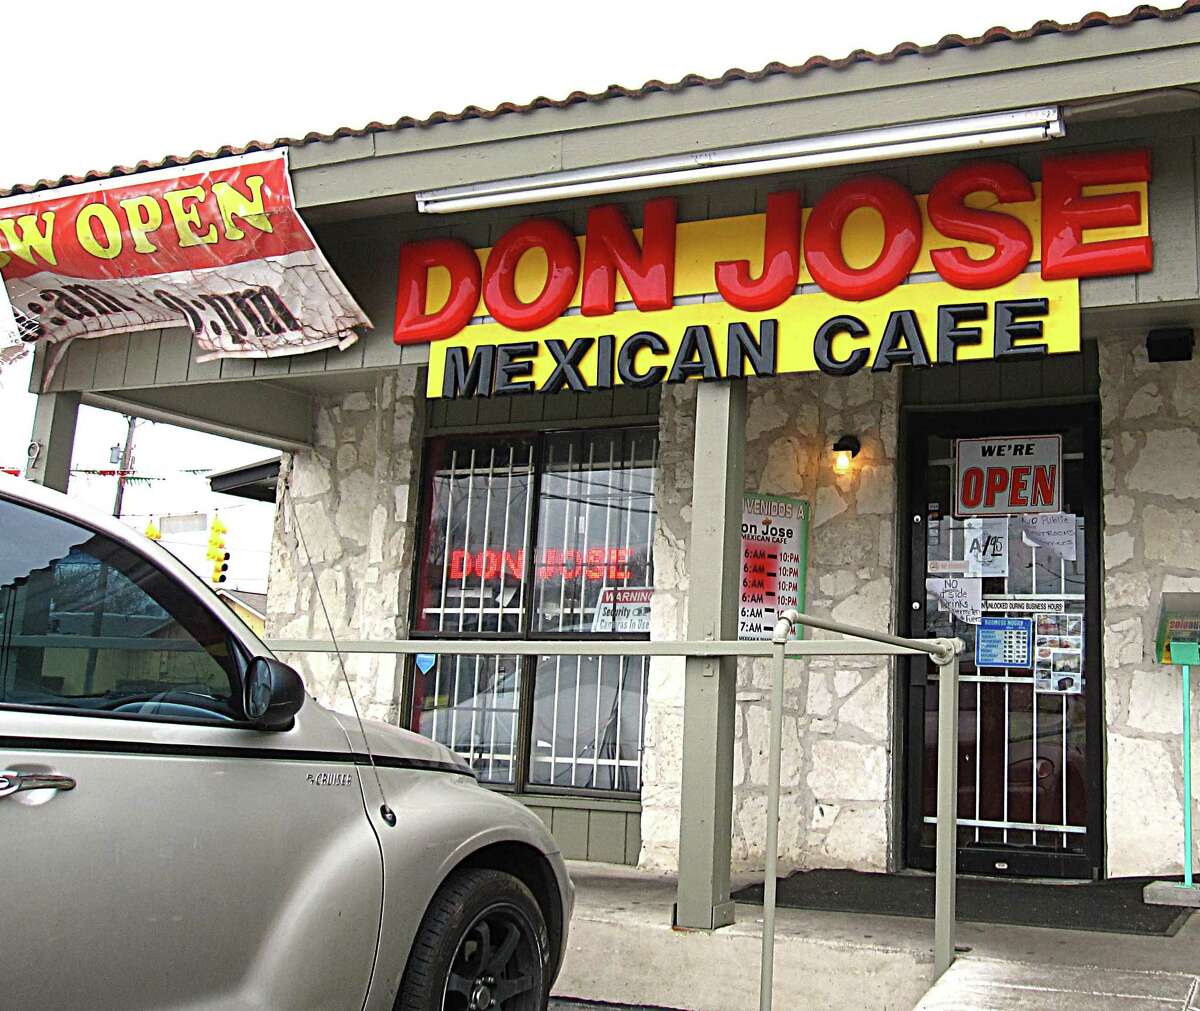 Don Jose Mexican Cafe on Pleasanton Road.